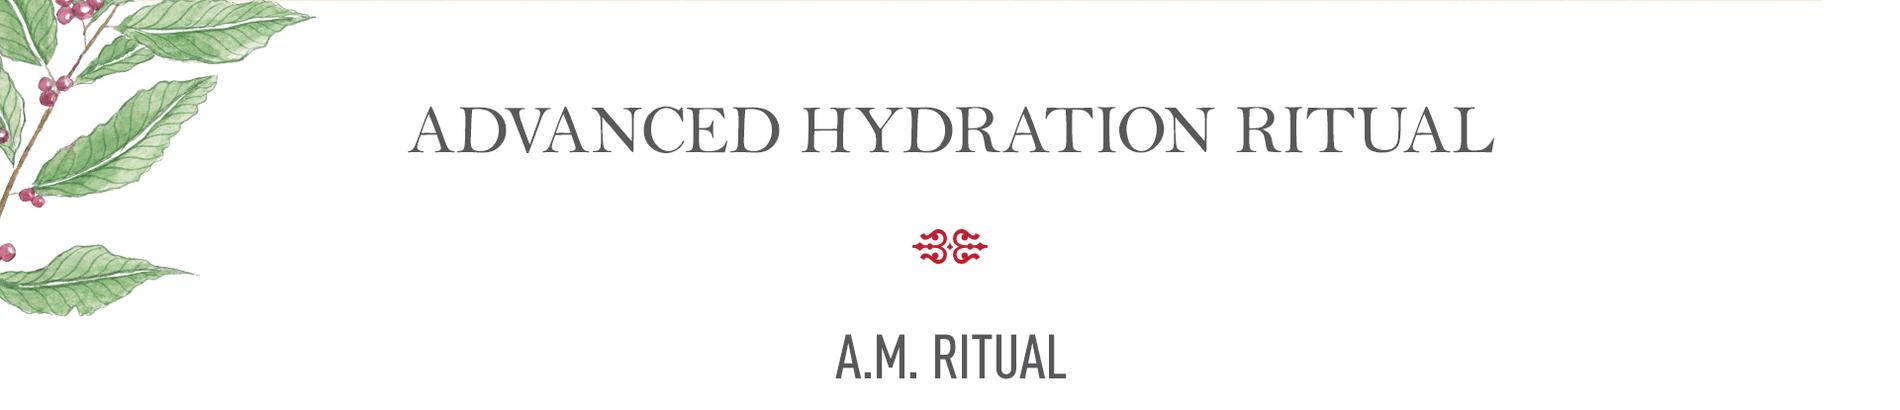 Advanced Hydration Ritual